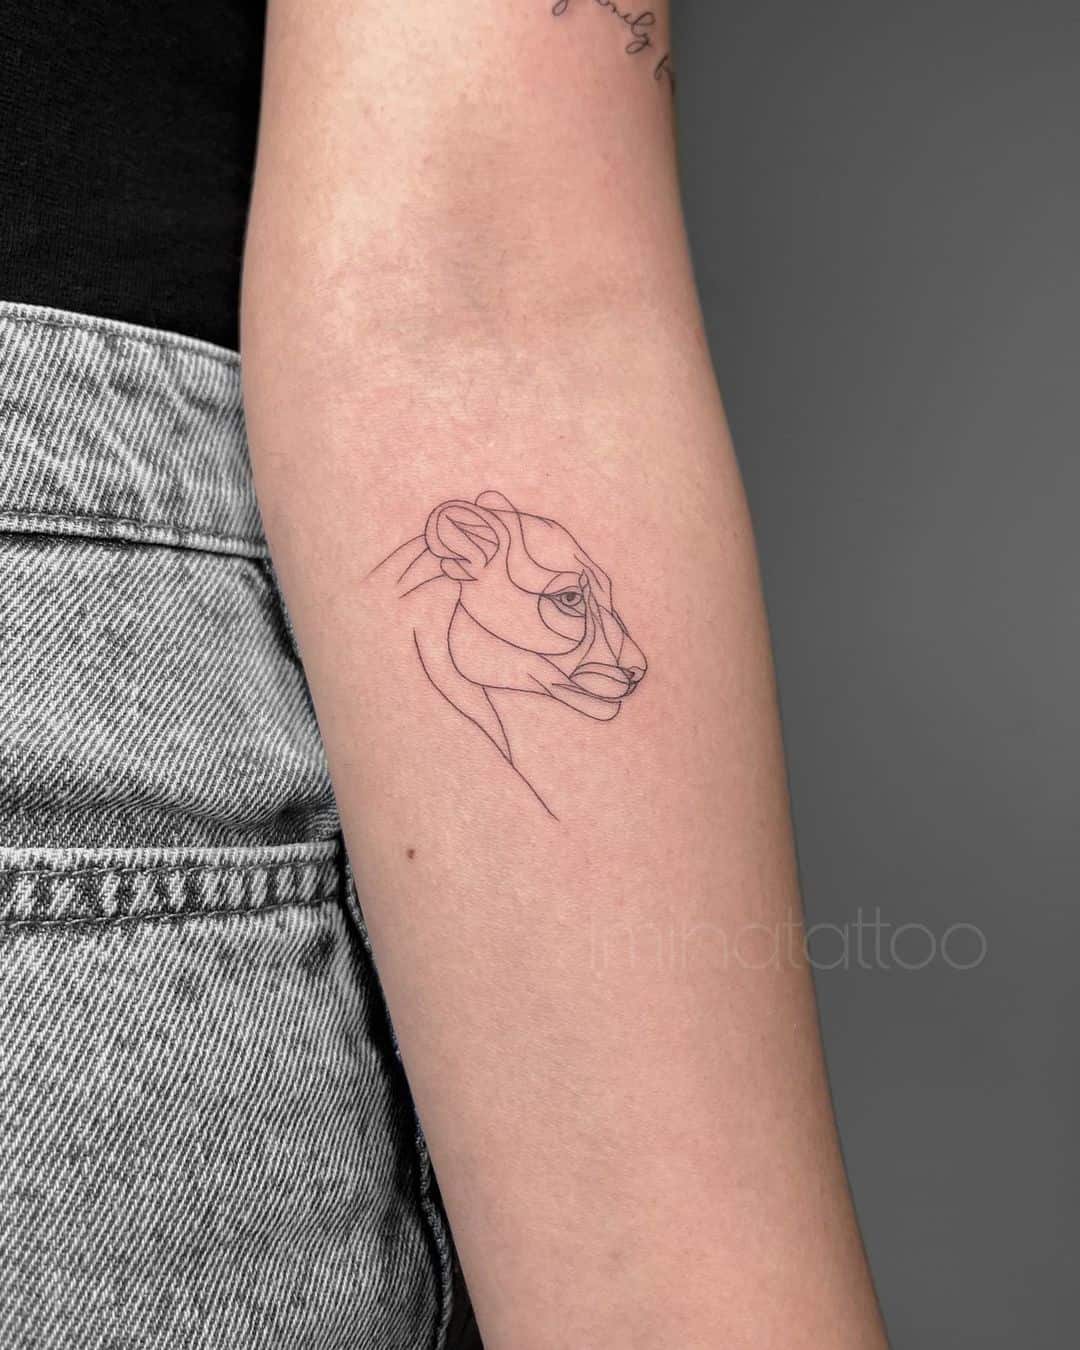 Fineline lion tattoo on arm by iminatattoo